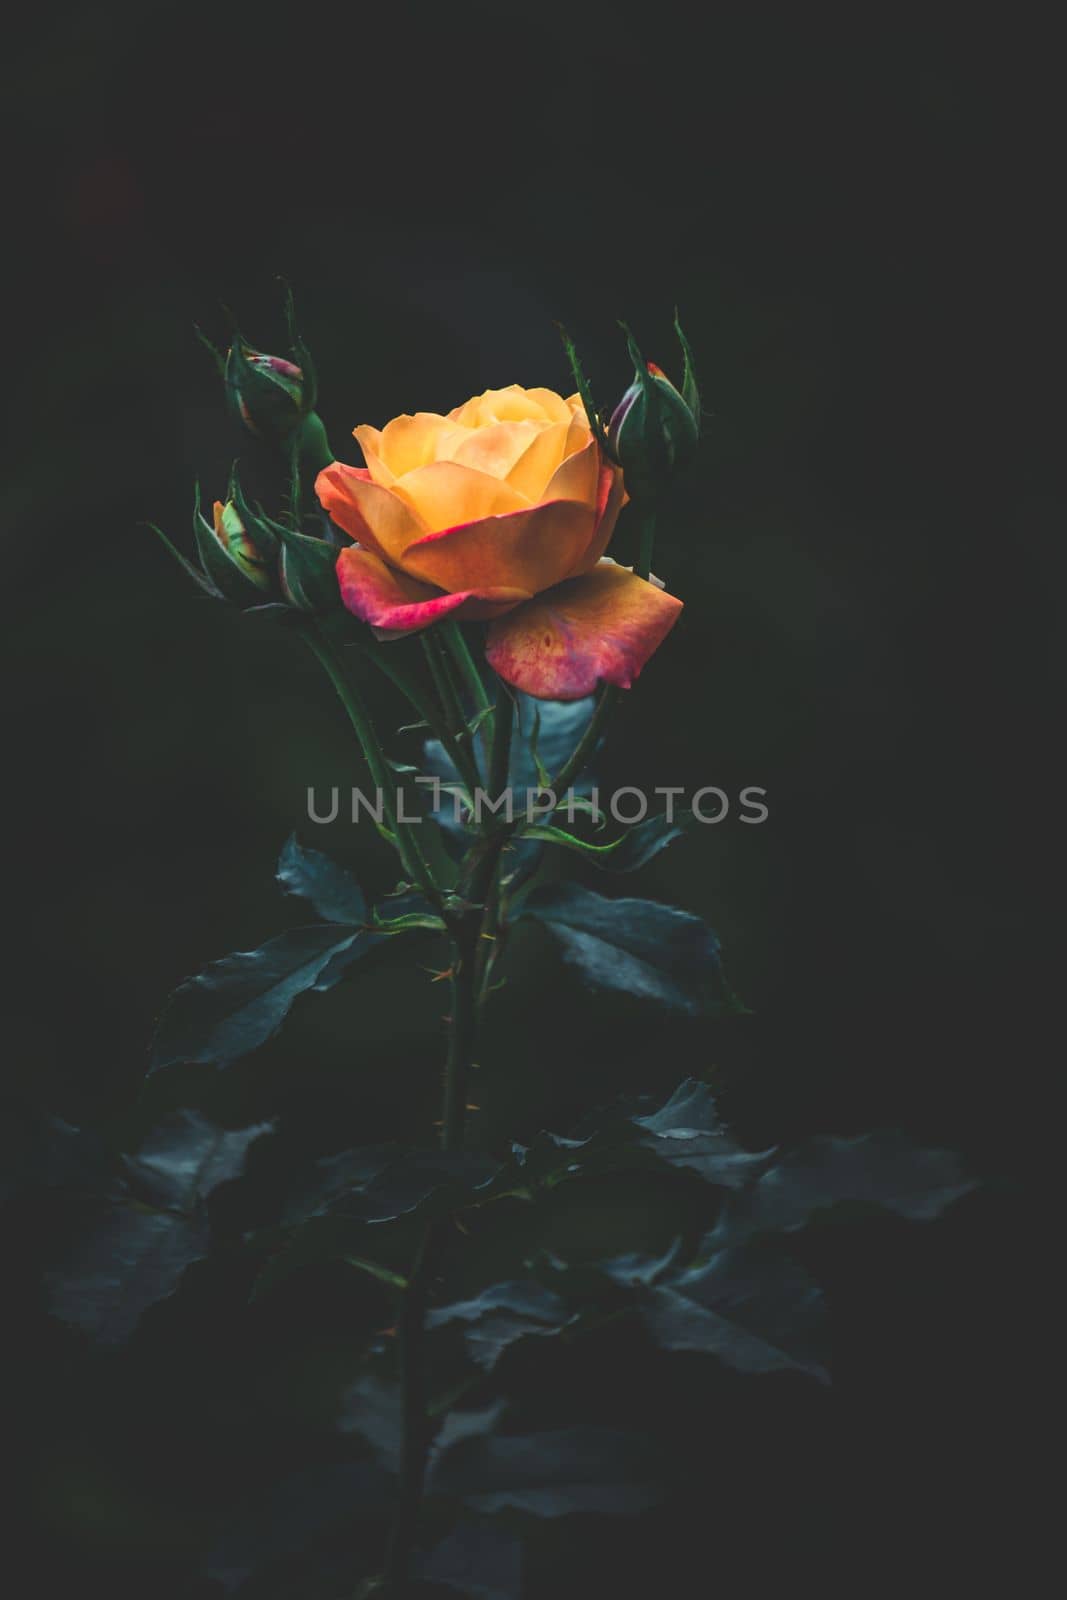 Garden rose, Yellow rose, Rose in the garden, bangladeshi garden rose by abdulkayum97